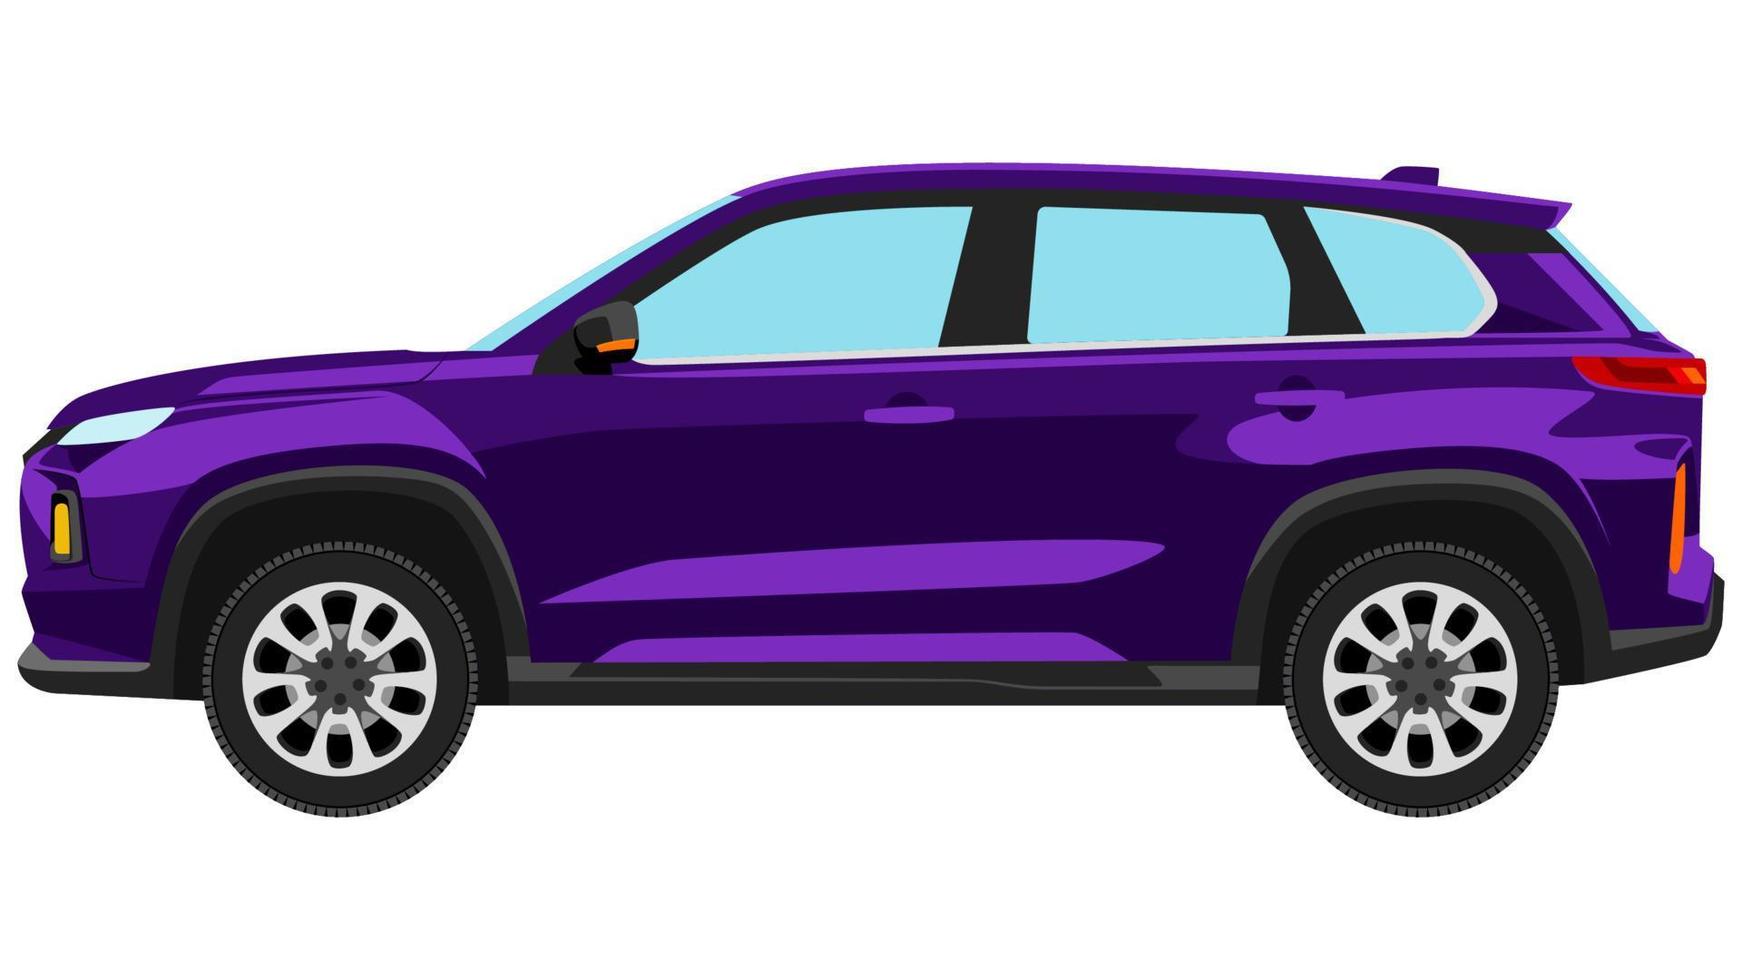 premie suv auto in helder kleur vector, realistisch auto vlak helder kleur vector illustratie